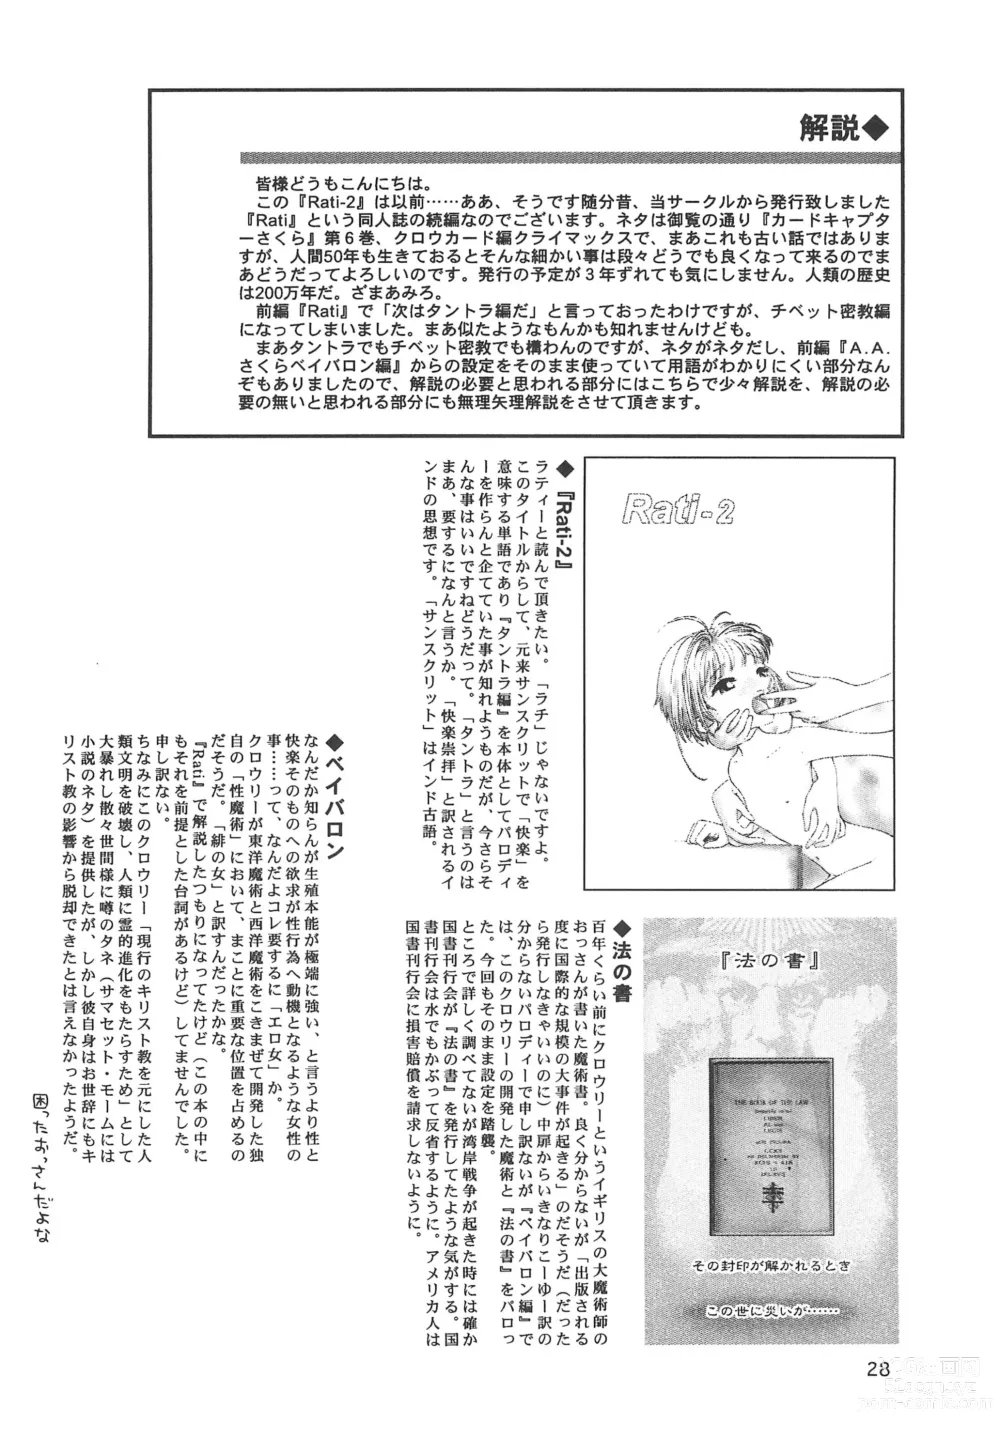 Page 28 of doujinshi Rati-2